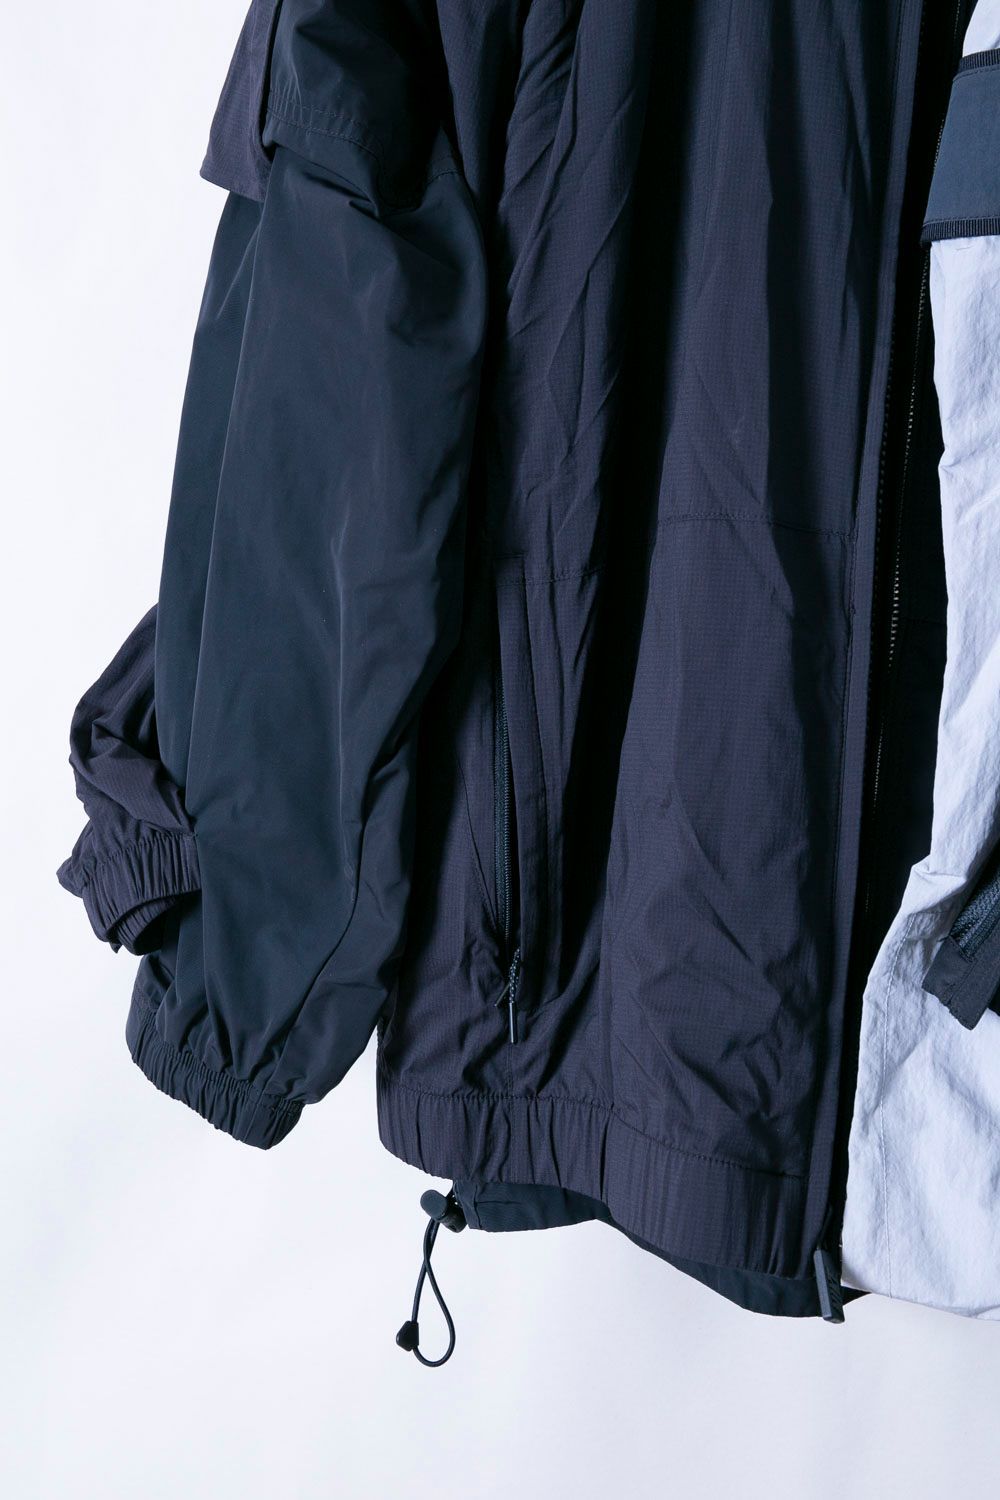 Nike Lab コレクションジャケット 再構築 DH NRG